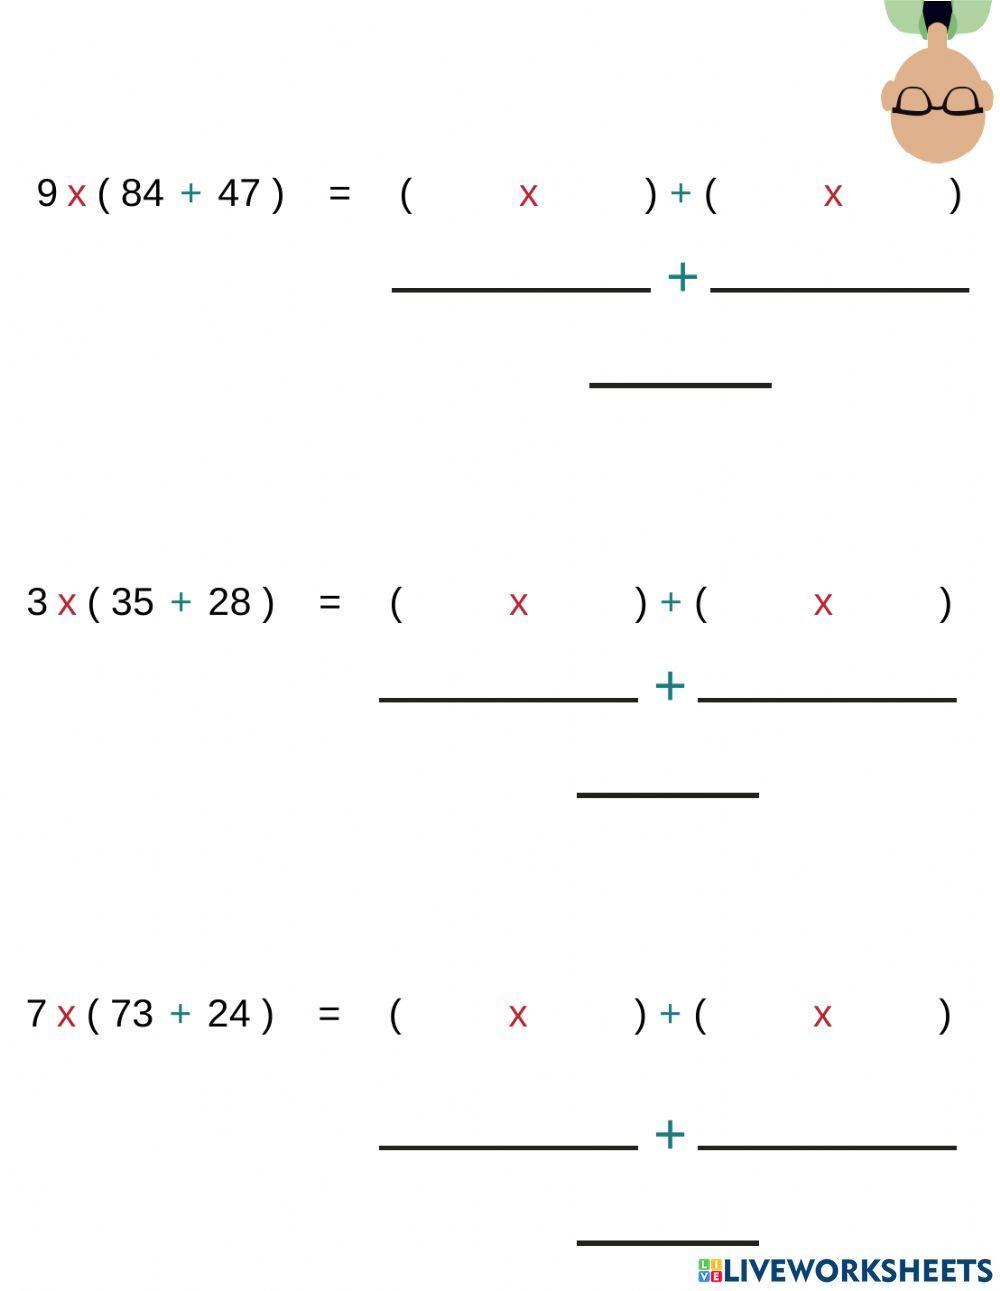 Distributive Property of Multiplication